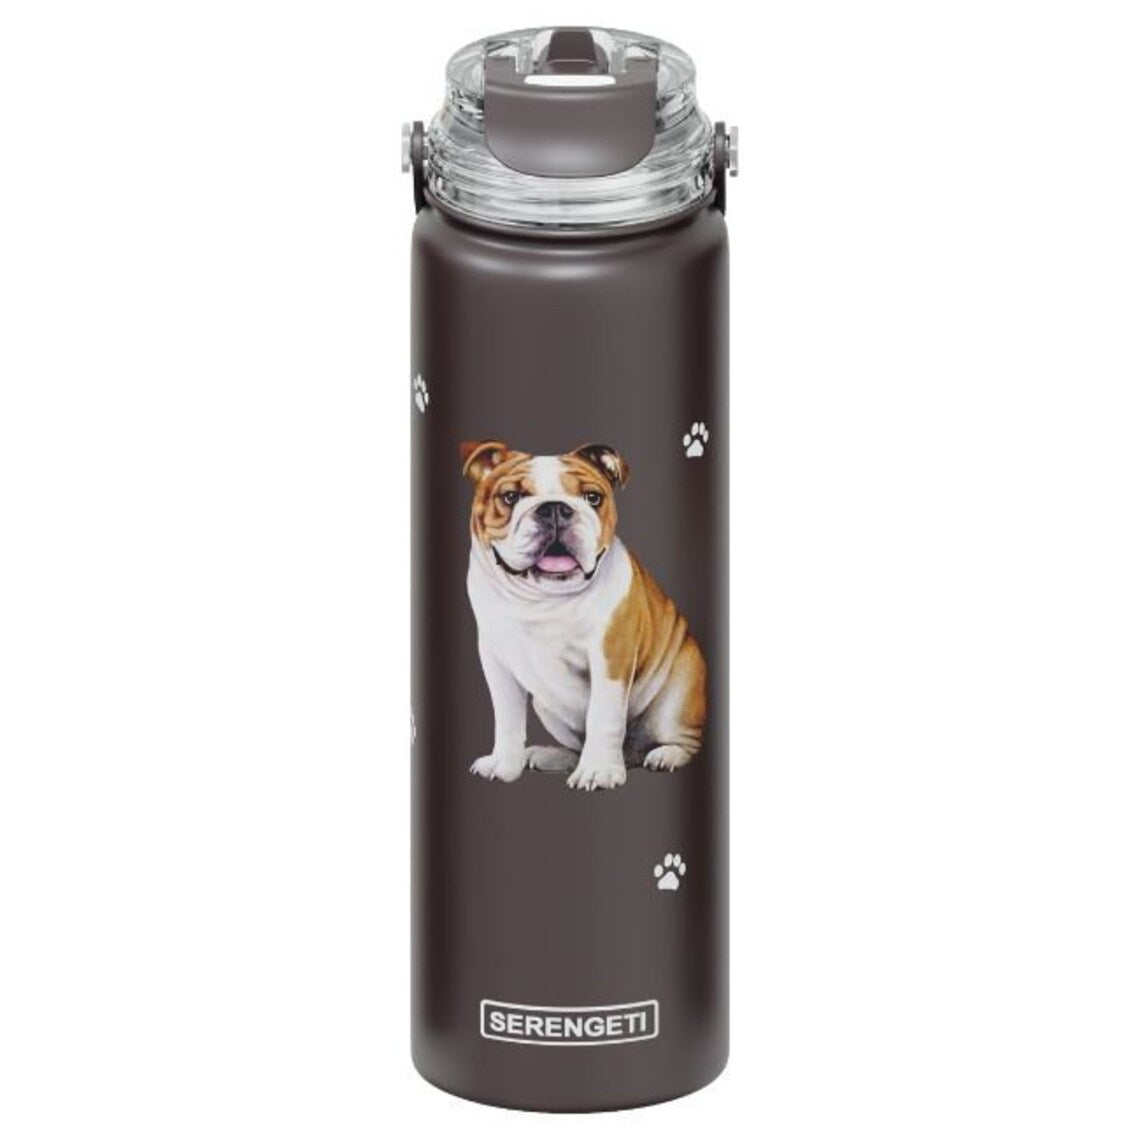 SERENGETI Stainless Steel Water Bottle 24oz - Bulldog